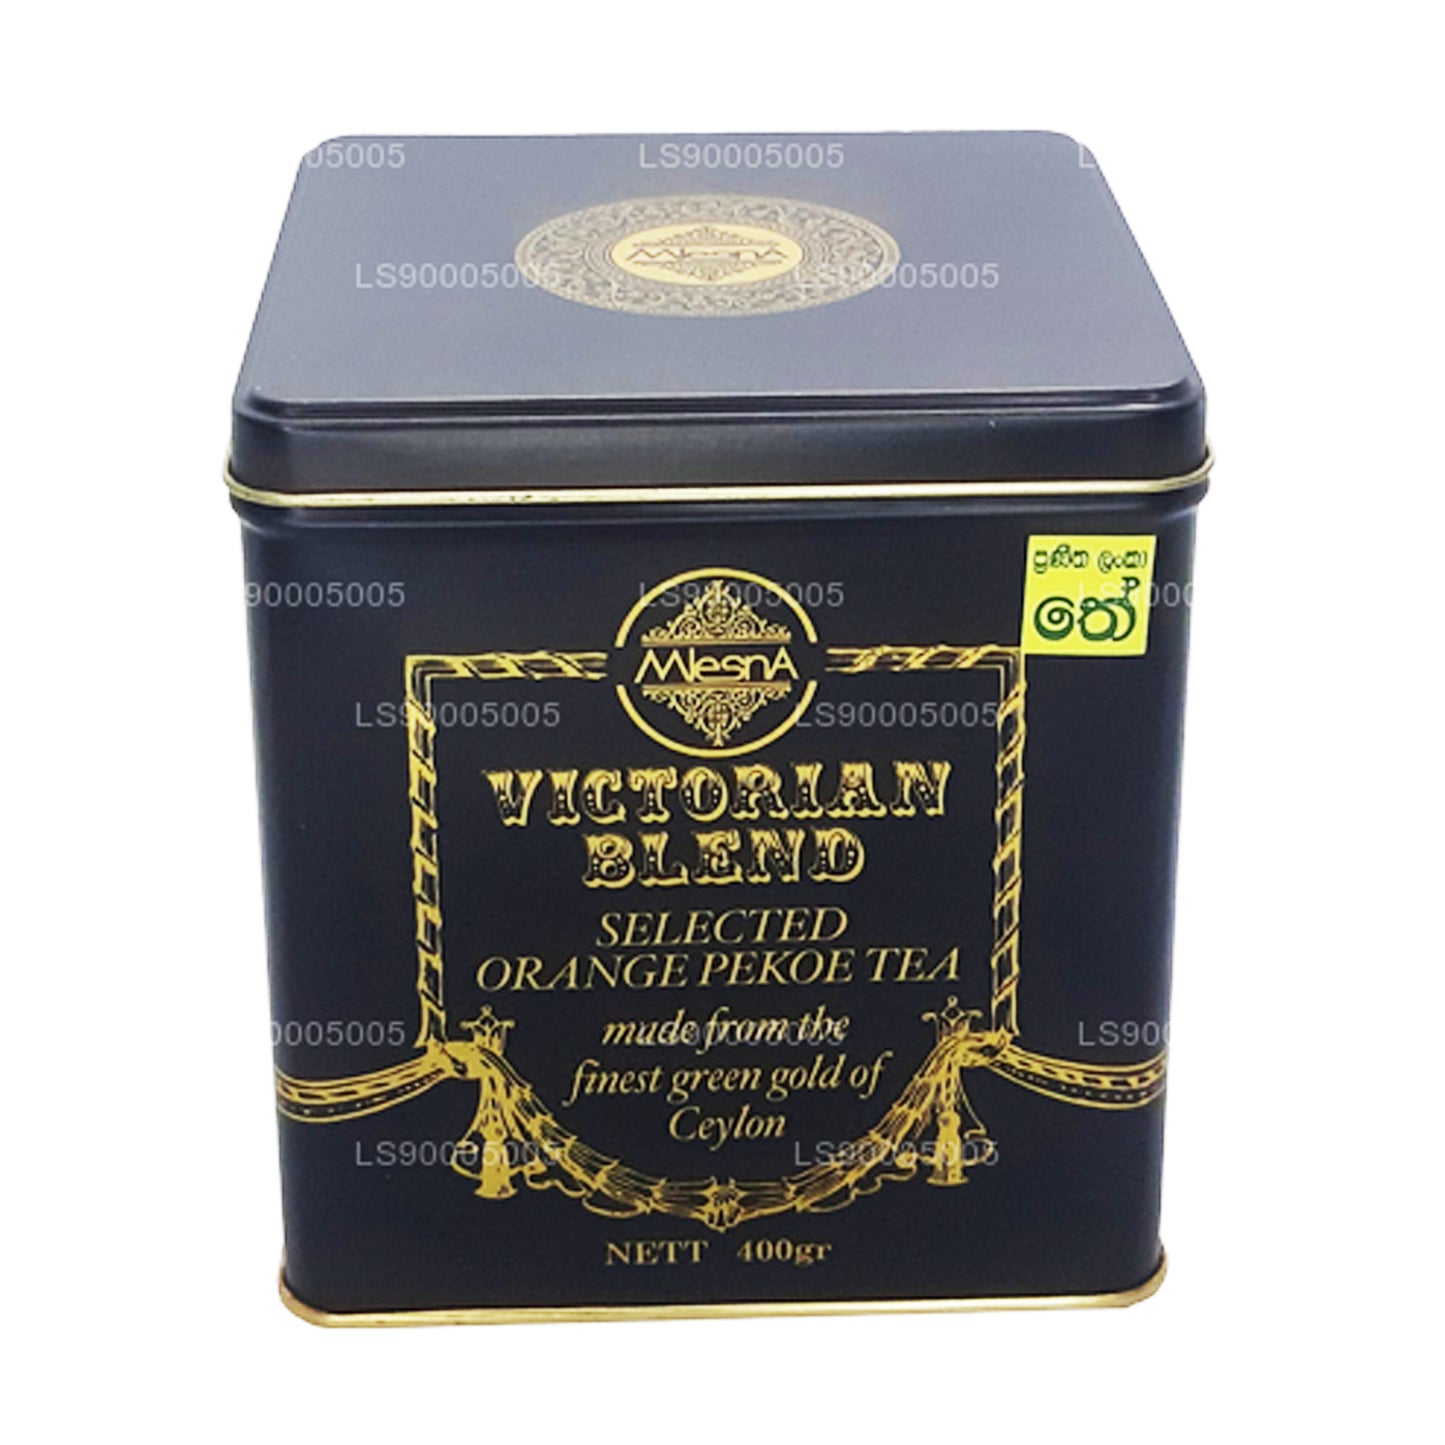 Mlesna Victorian Blend OP Leaf Tea Black Metal Caddy